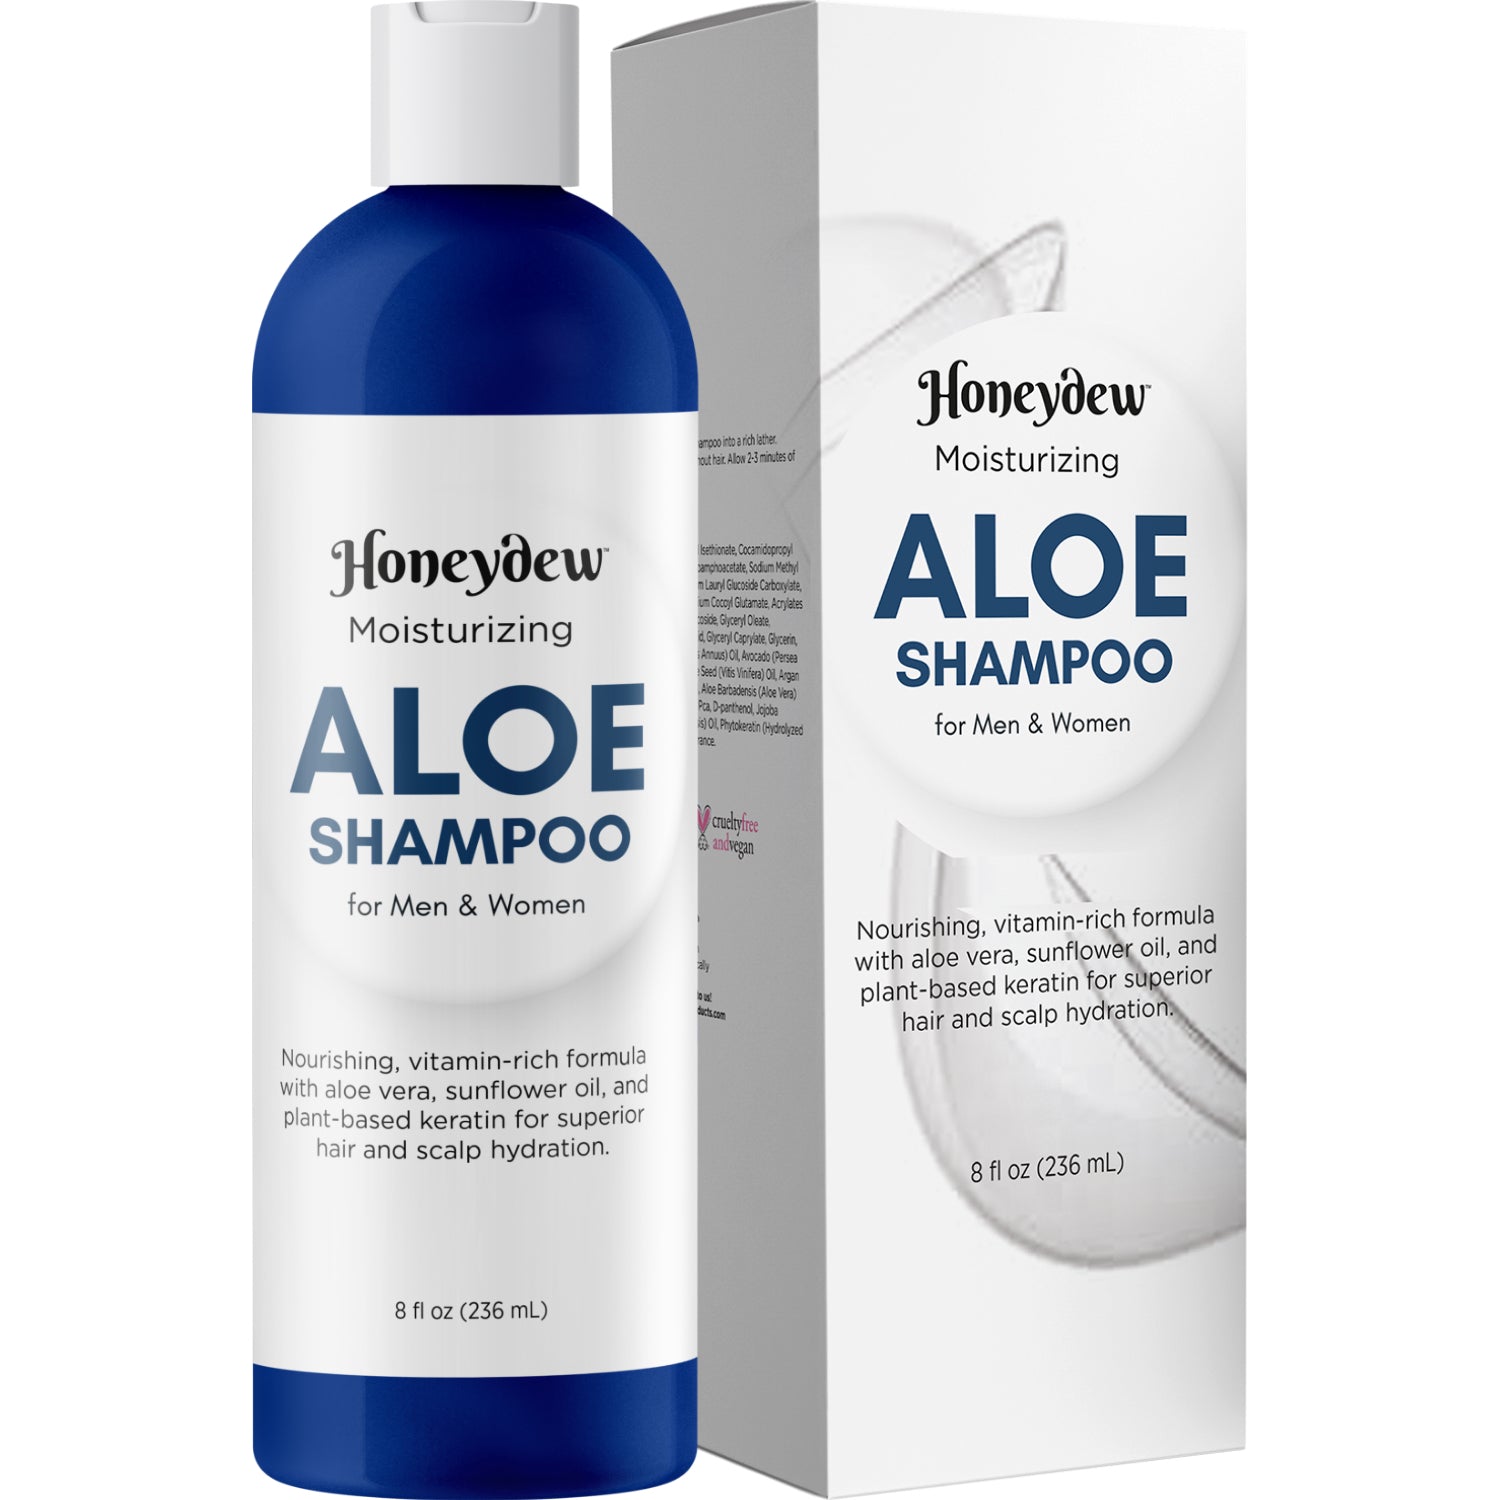 Honeydew Moisturizing Aloe Shampoo